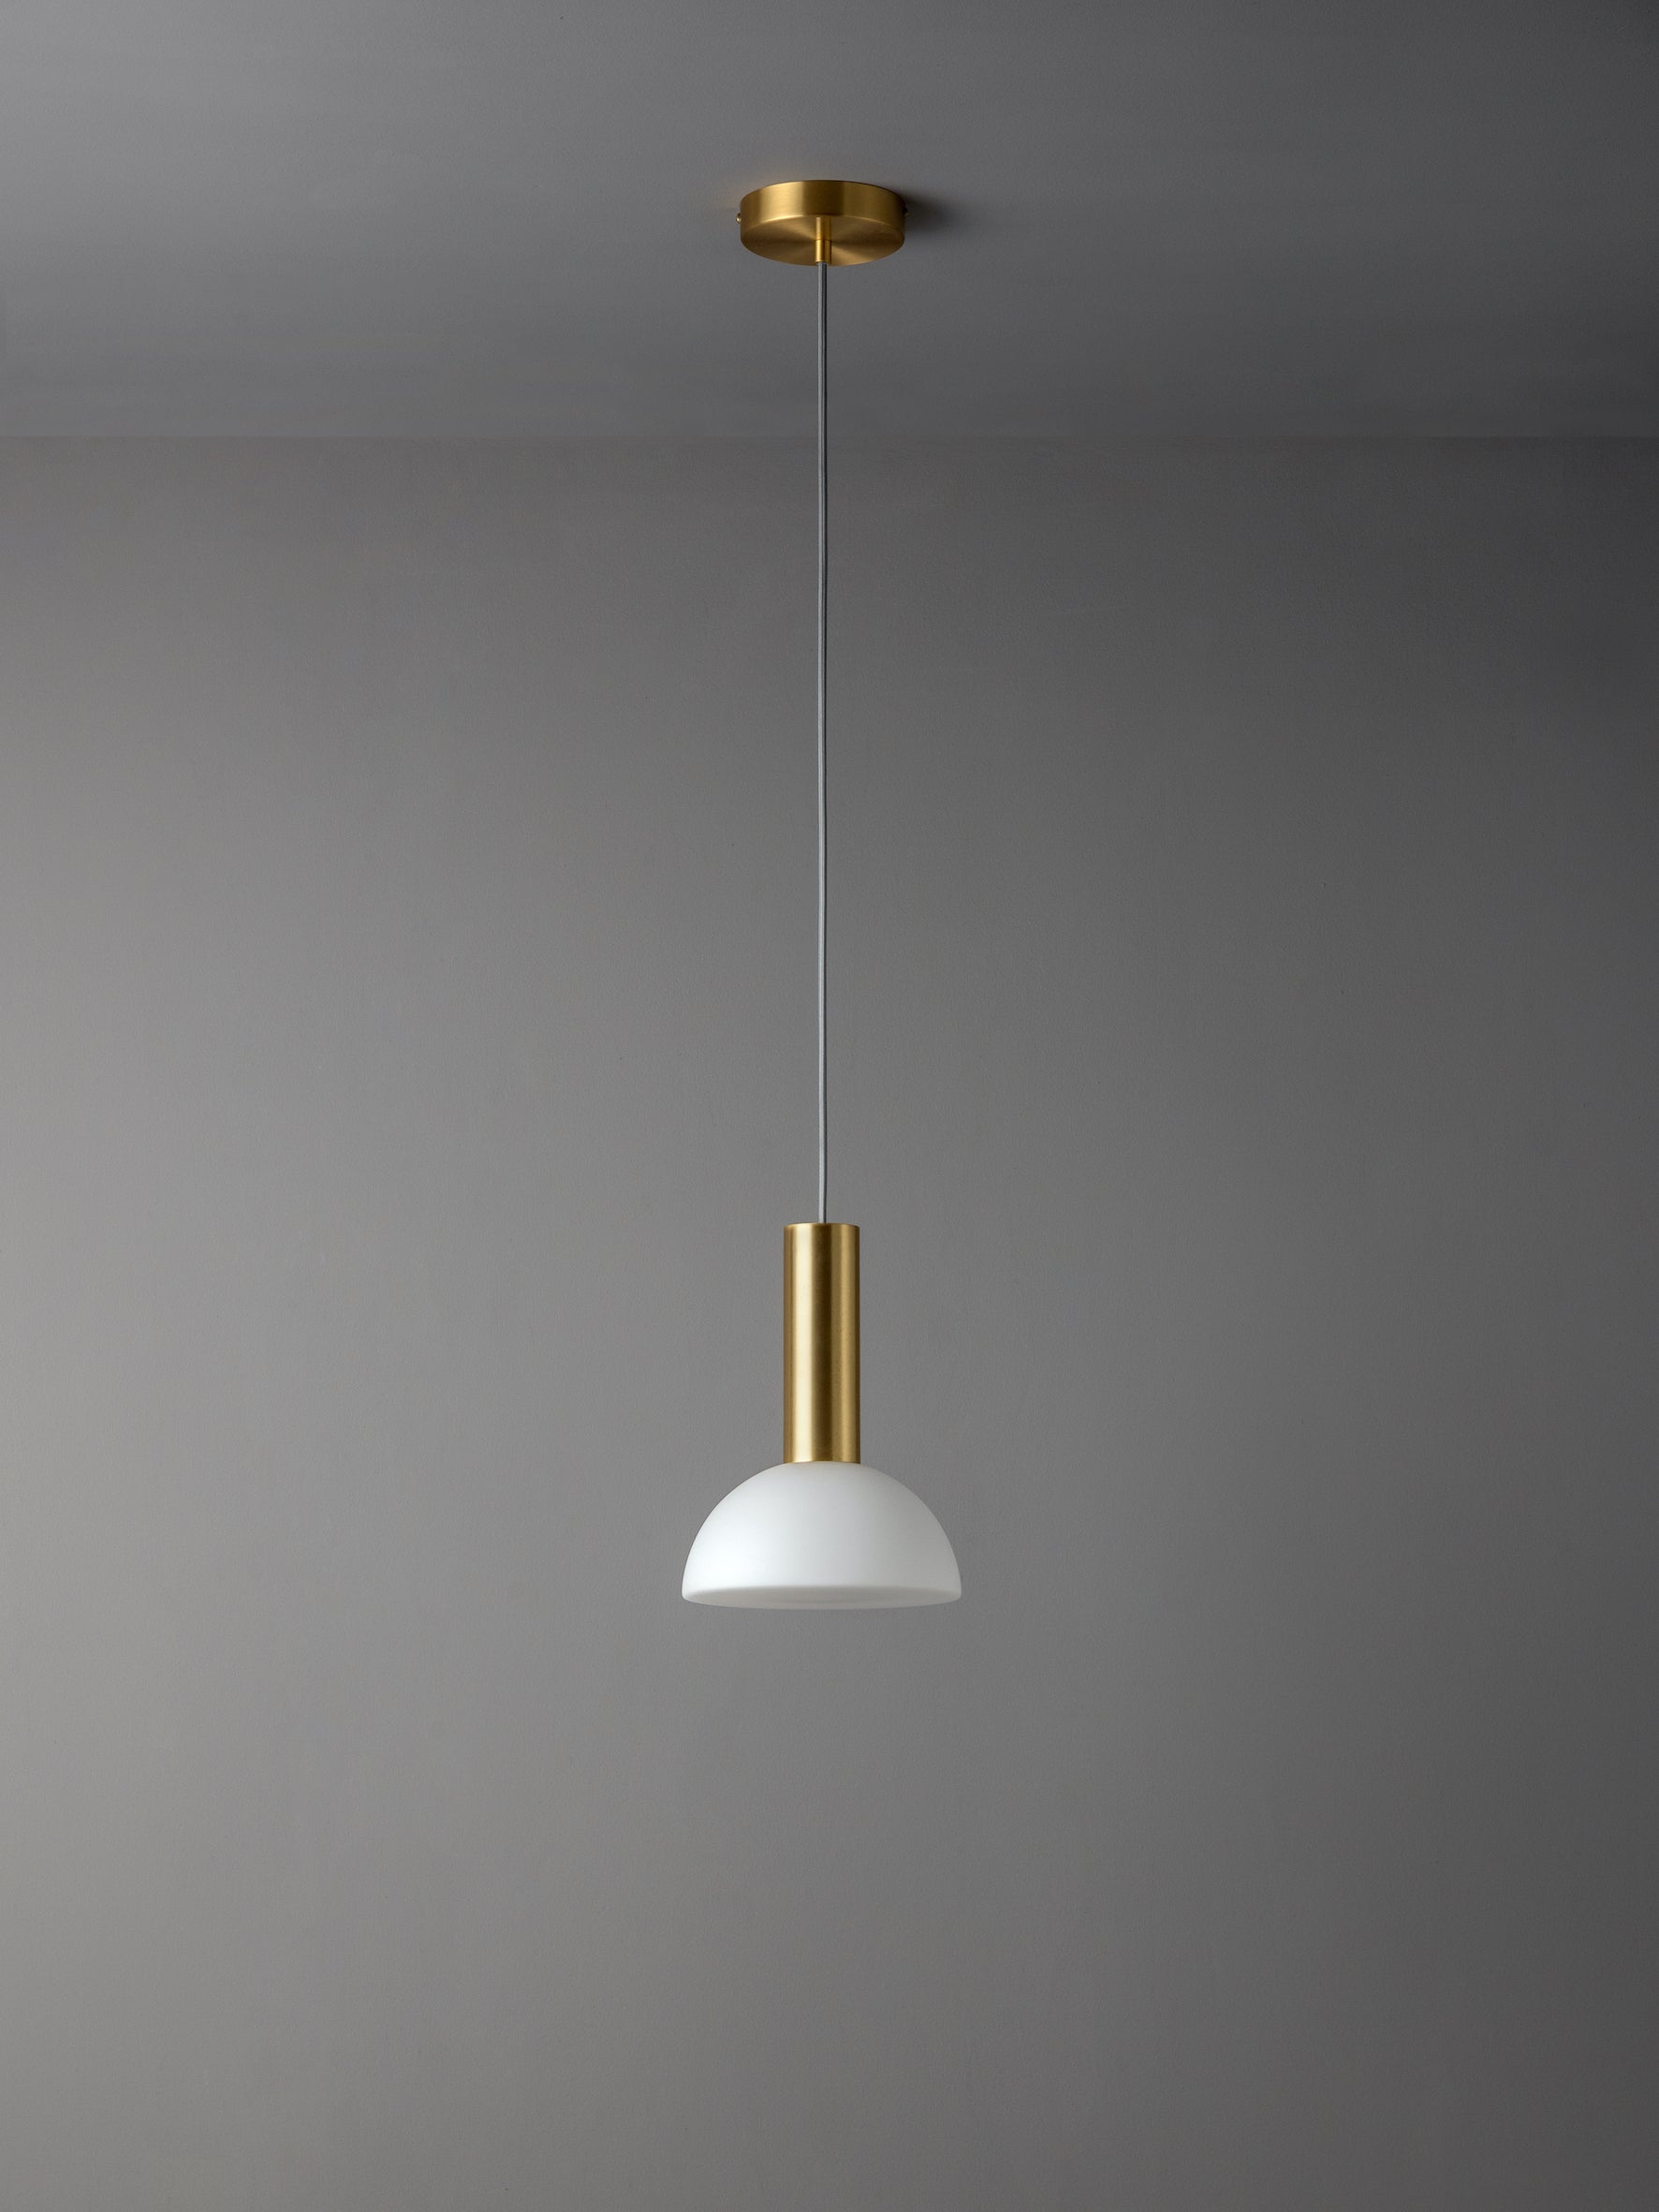 Silio - 1 light brushed brass and opal pendant | Ceiling Light | Lights & Lamps Inc | Modern Affordable Designer Lighting | USA